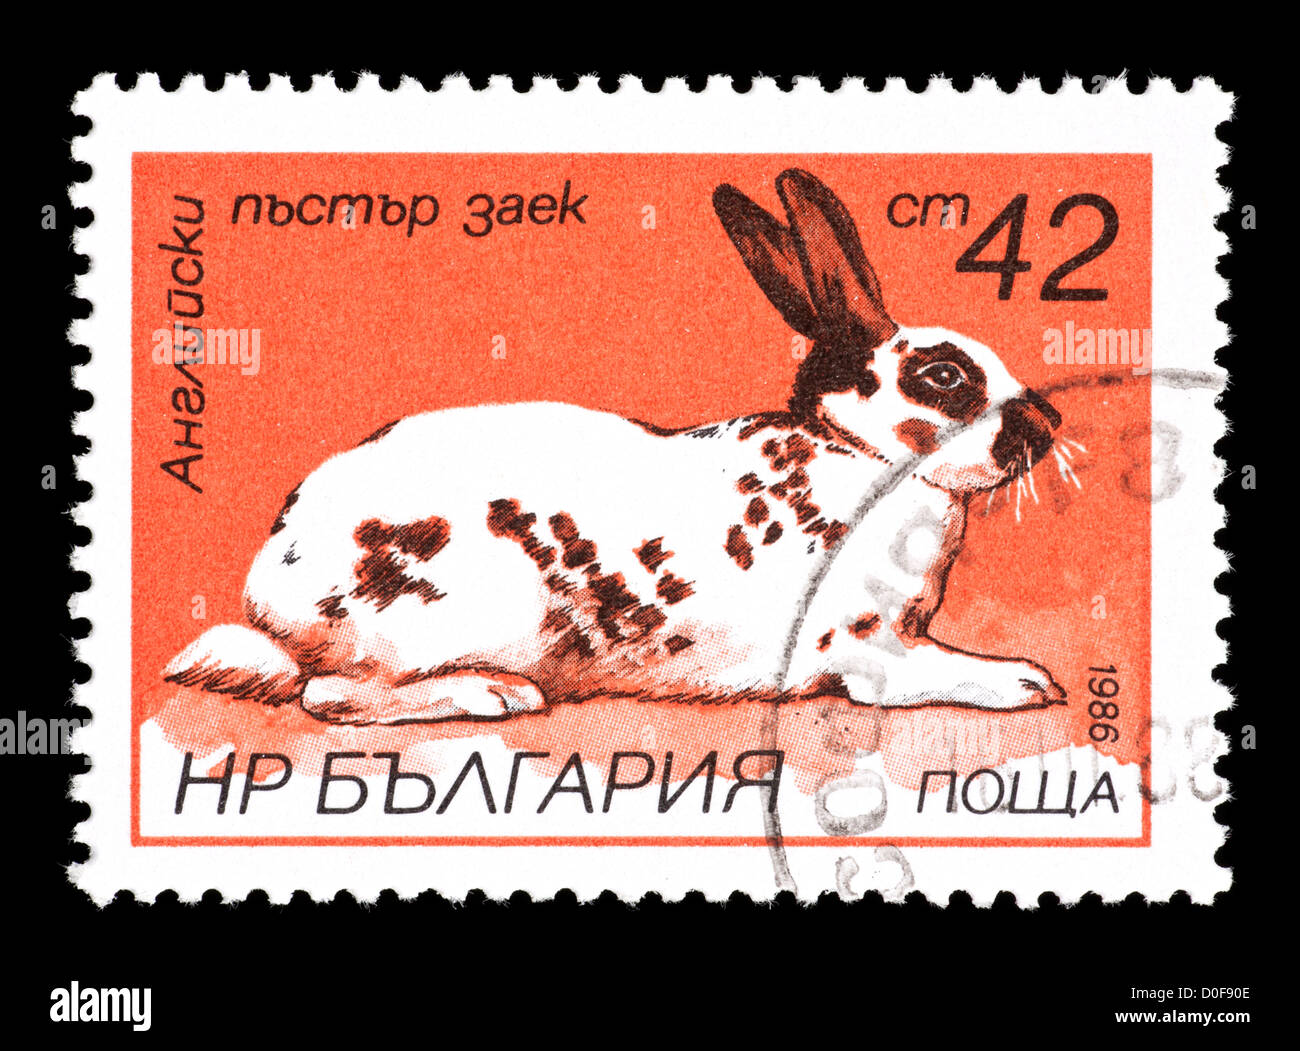 Postage stamp from Bulgaria depicting rabbit Stock Photo - Alamy